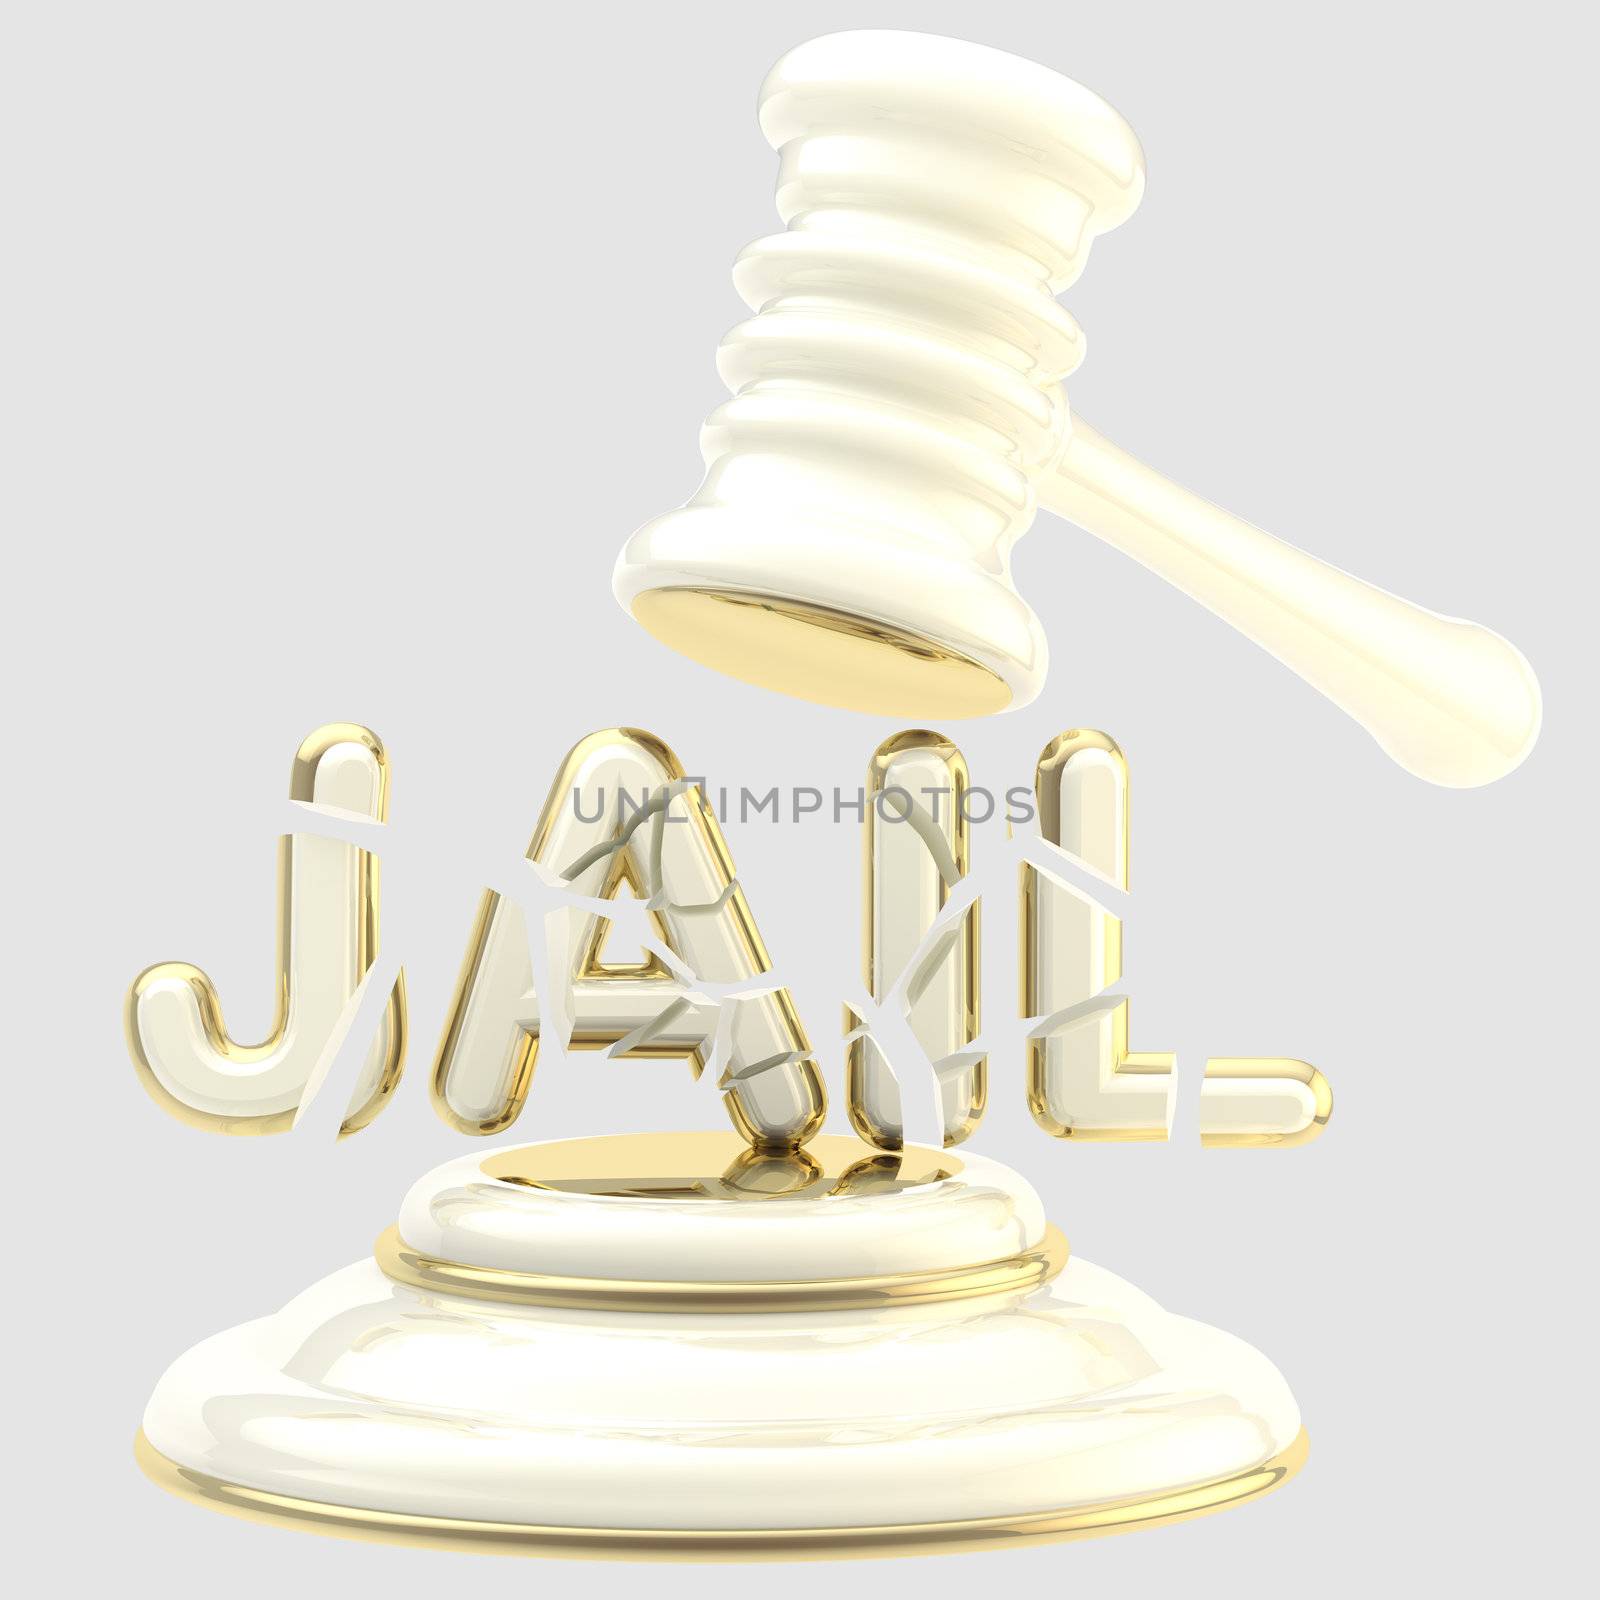 Word "Jail" under glossy white and golden judge's gavel